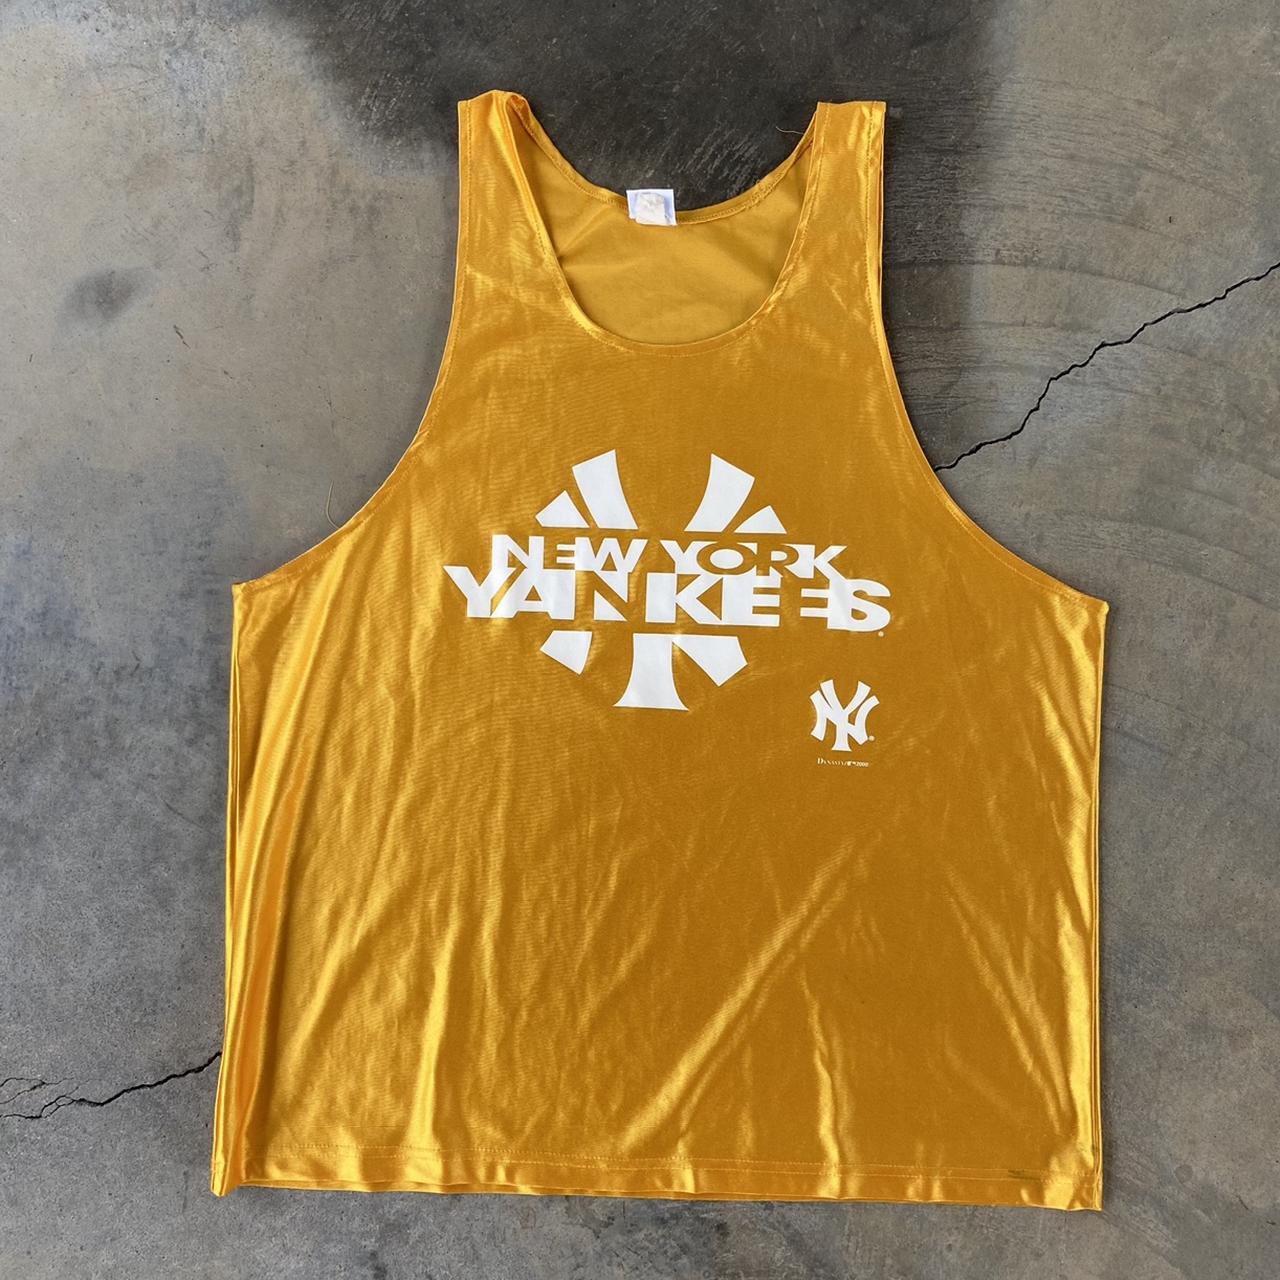 Vintage New York Yankees Yellow Jersey at